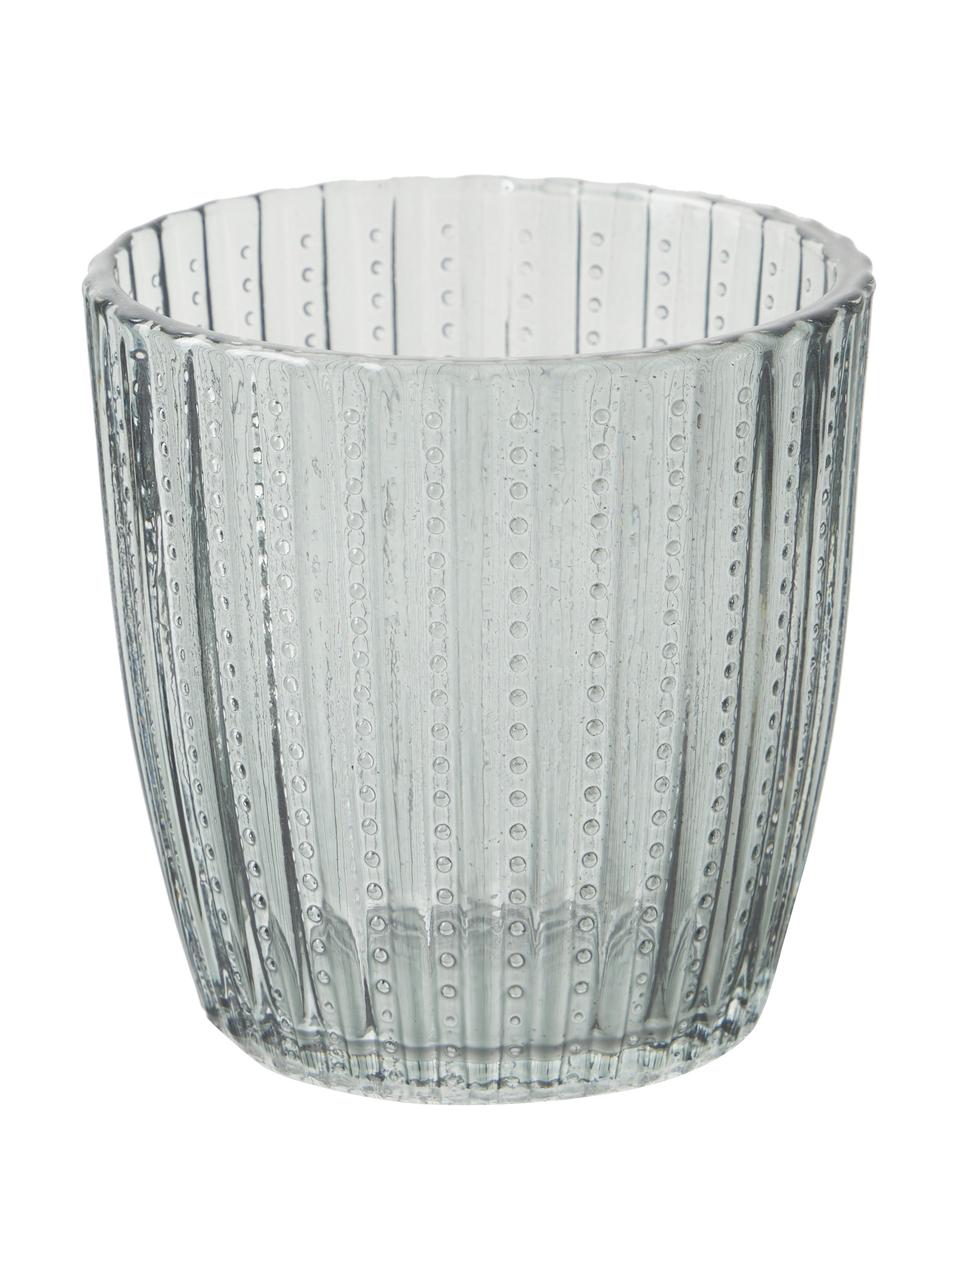 Teelichthalter-Set Marilu aus Glas, 4-tlg., Glas, Grau, transparent, Ø 8 x H 8 cm